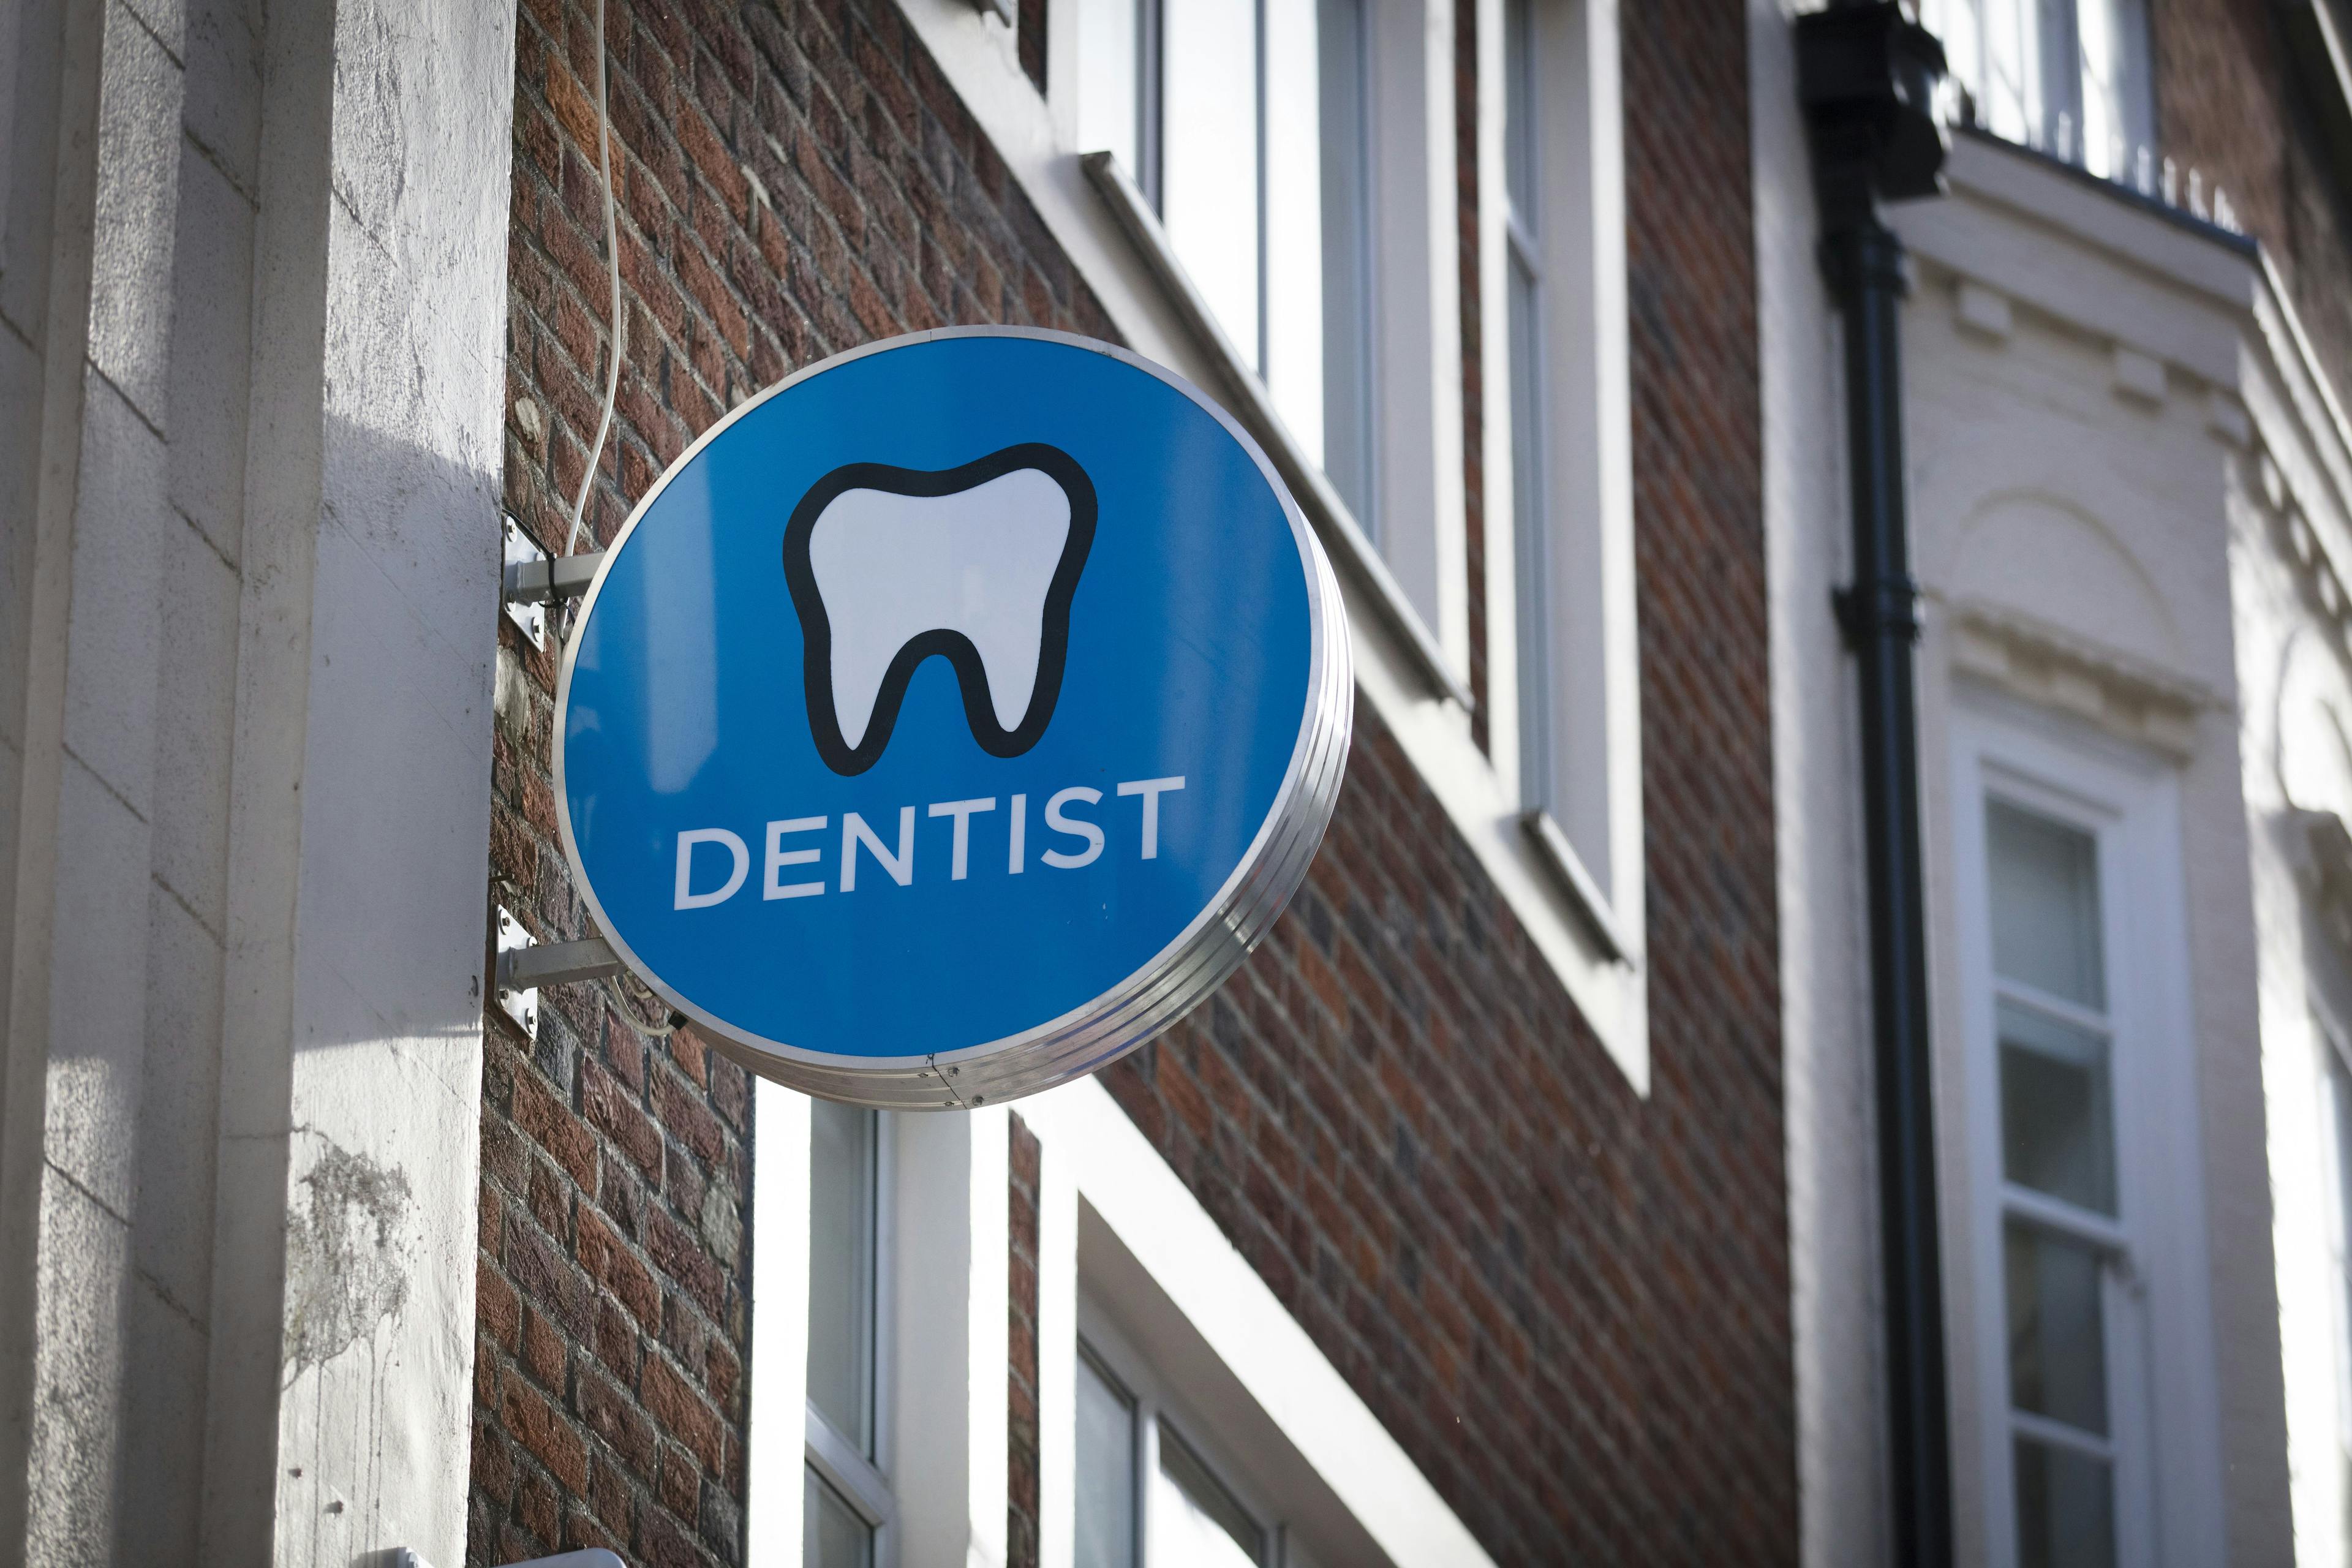 Dental practice valuations